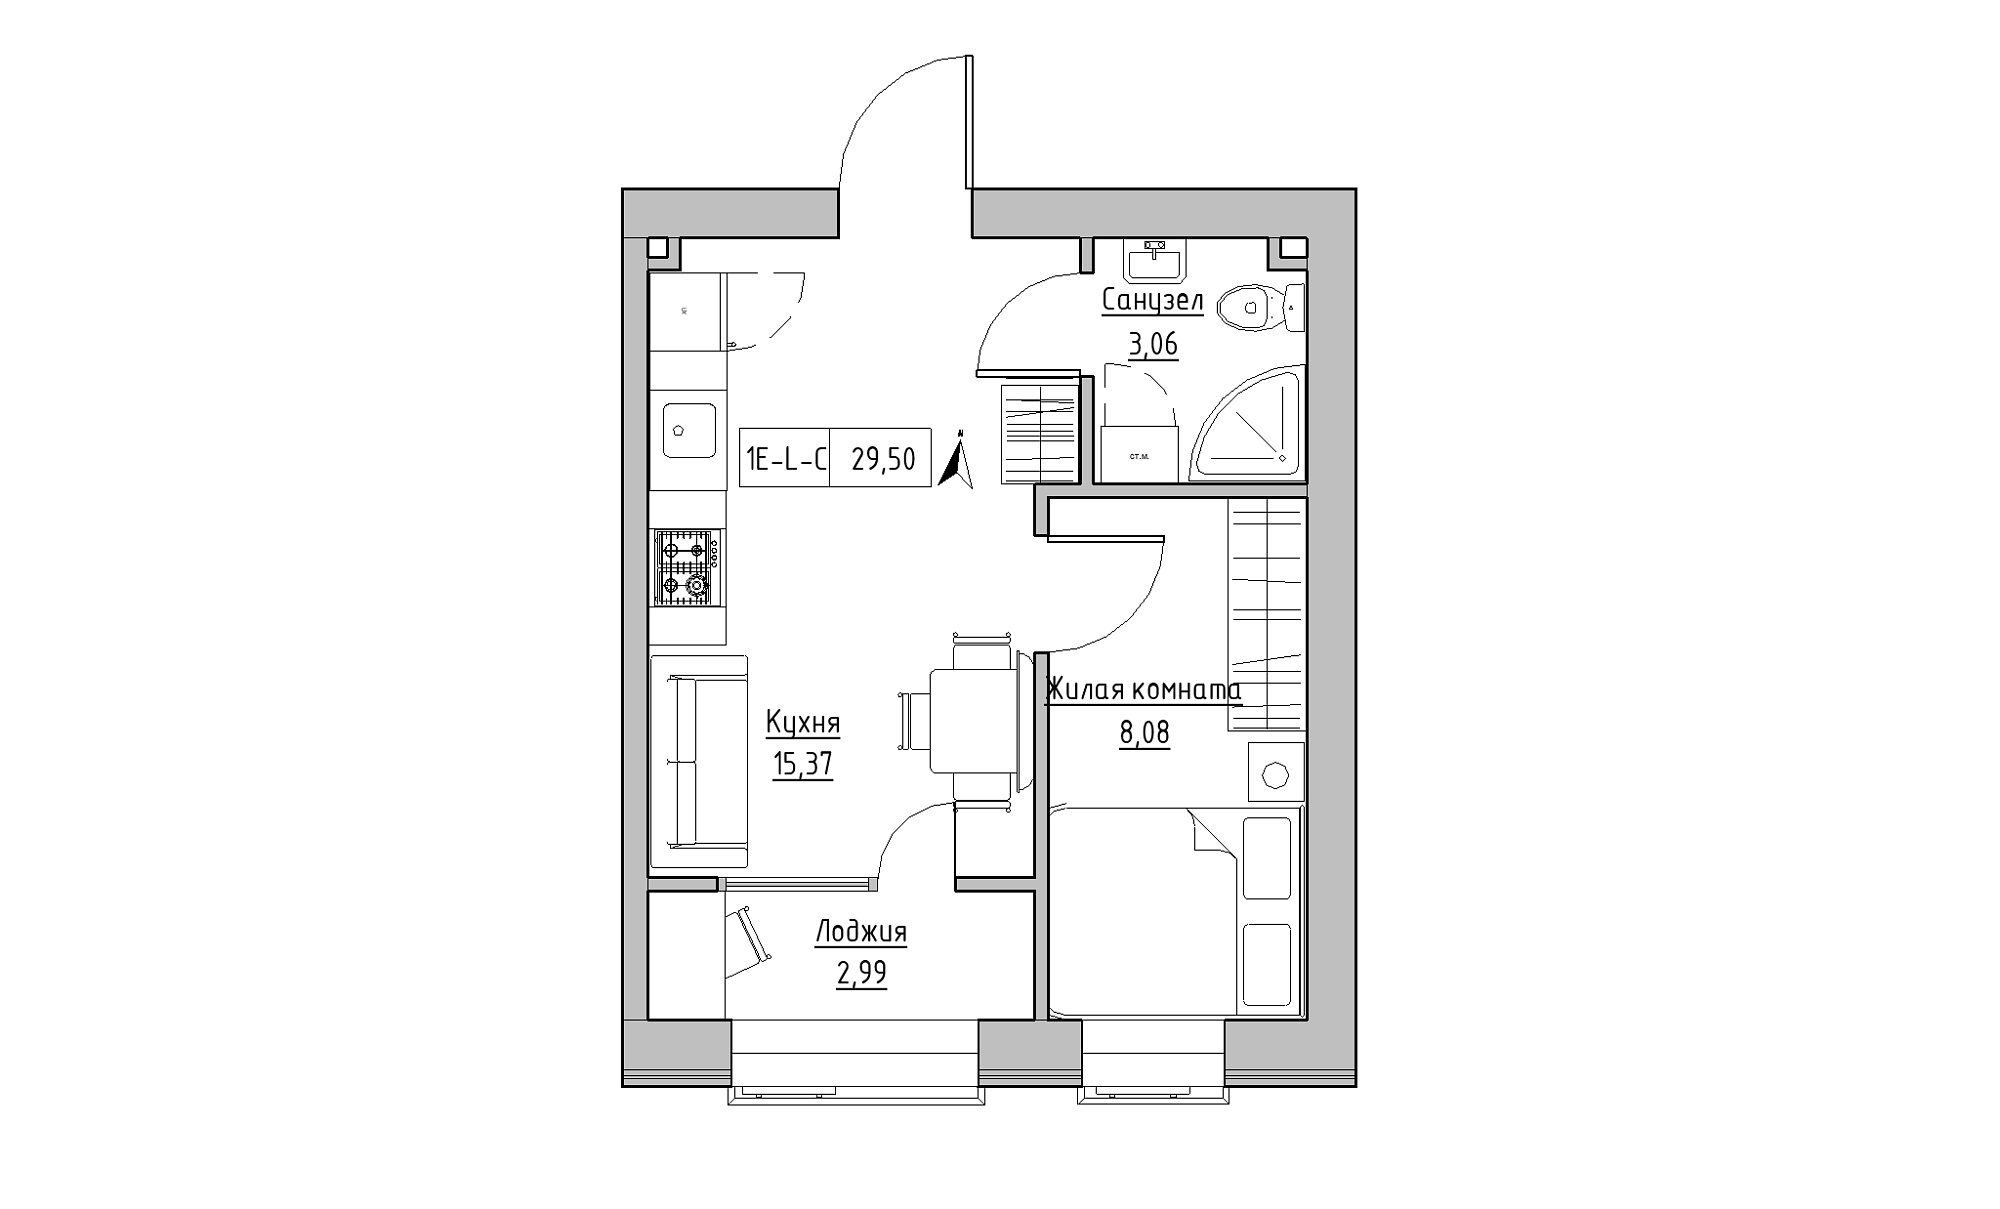 Planning 1-rm flats area 29.5m2, KS-016-02/0006.